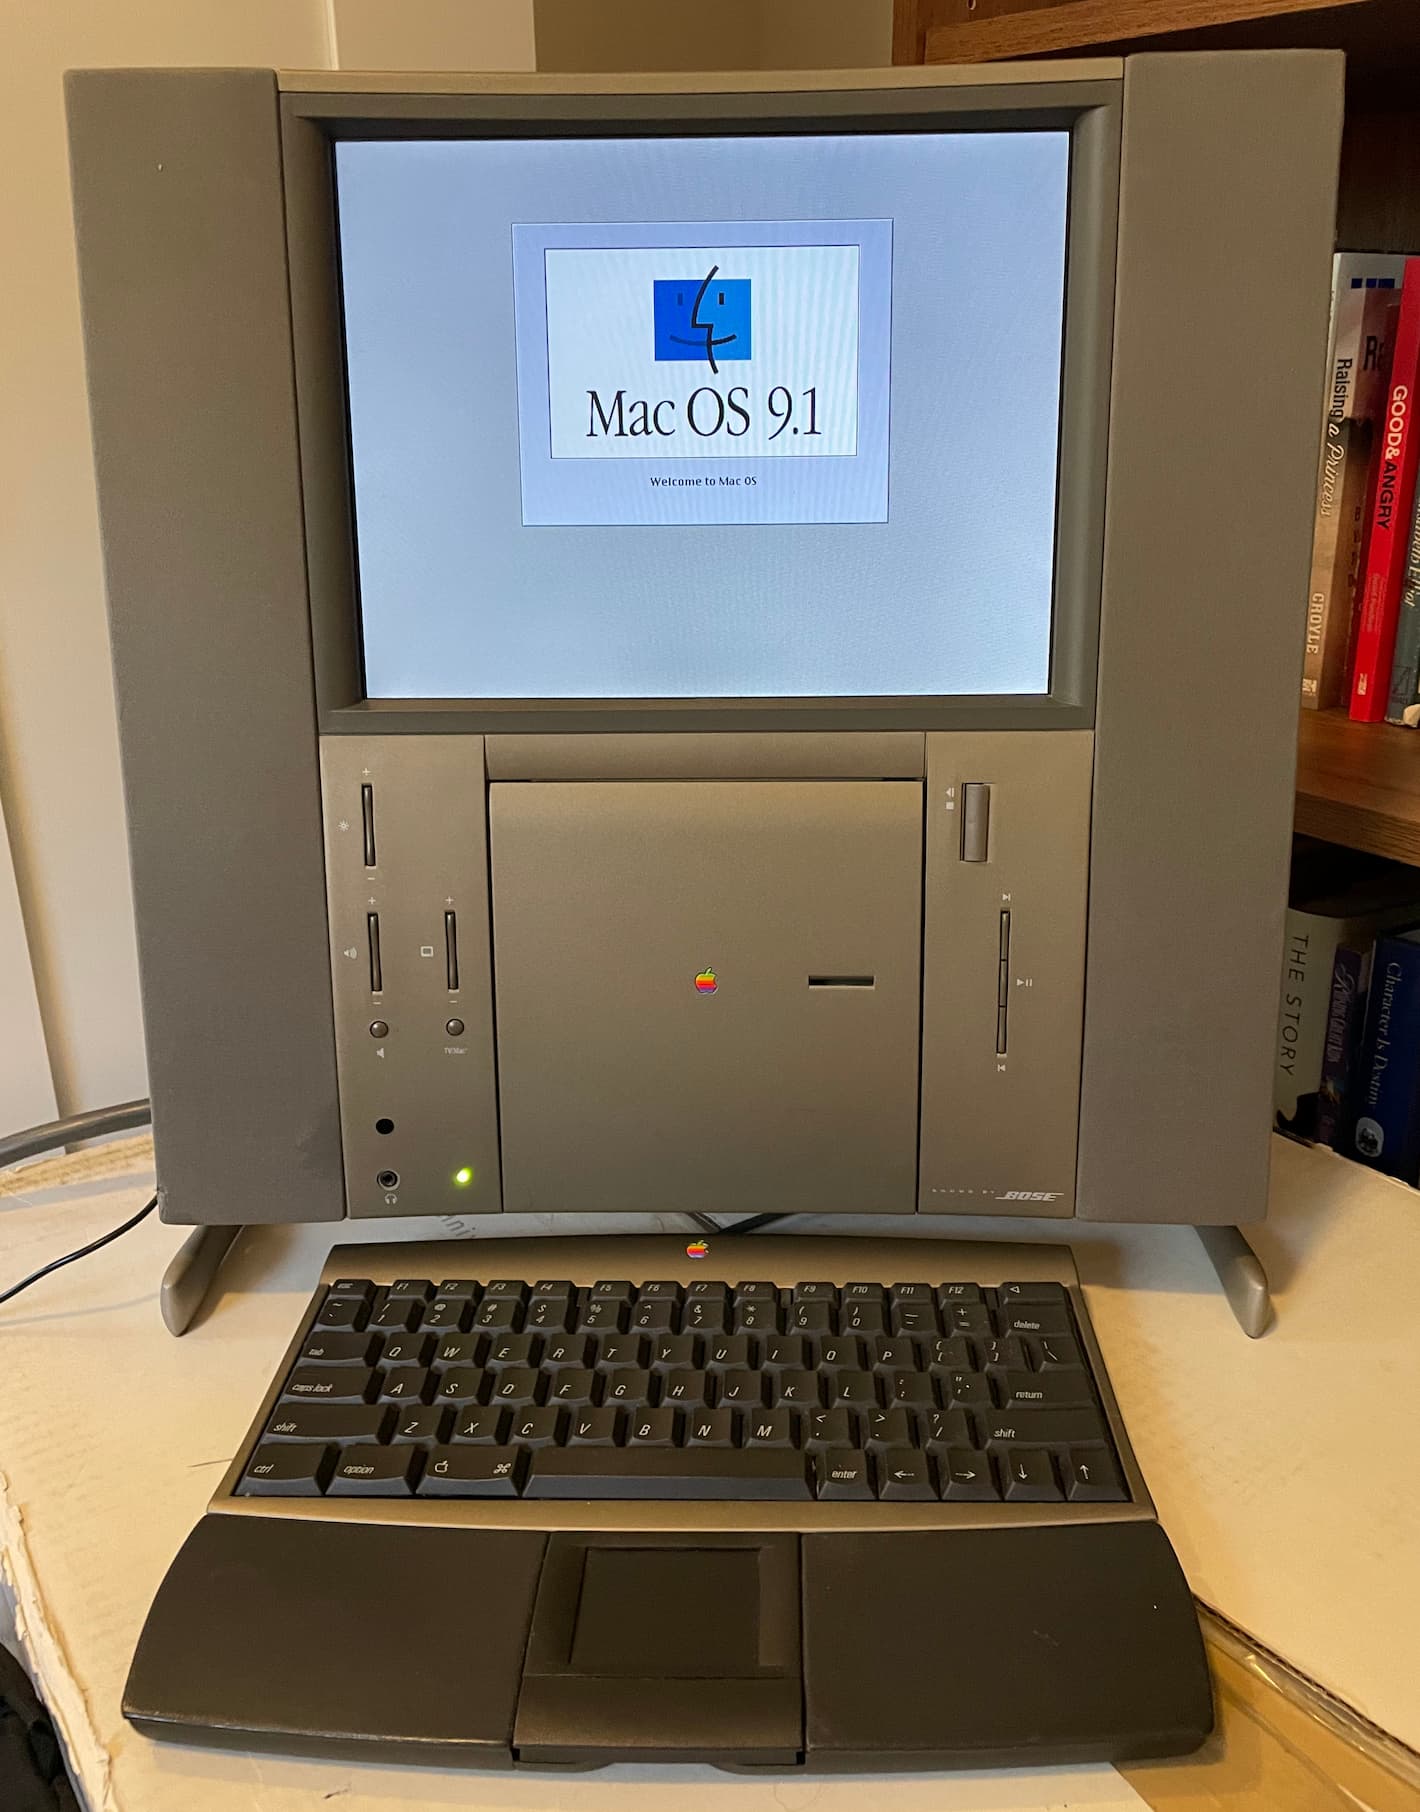 A Twentieth Anniversary Macintosh showing the Mac OS 9.1 boot screen